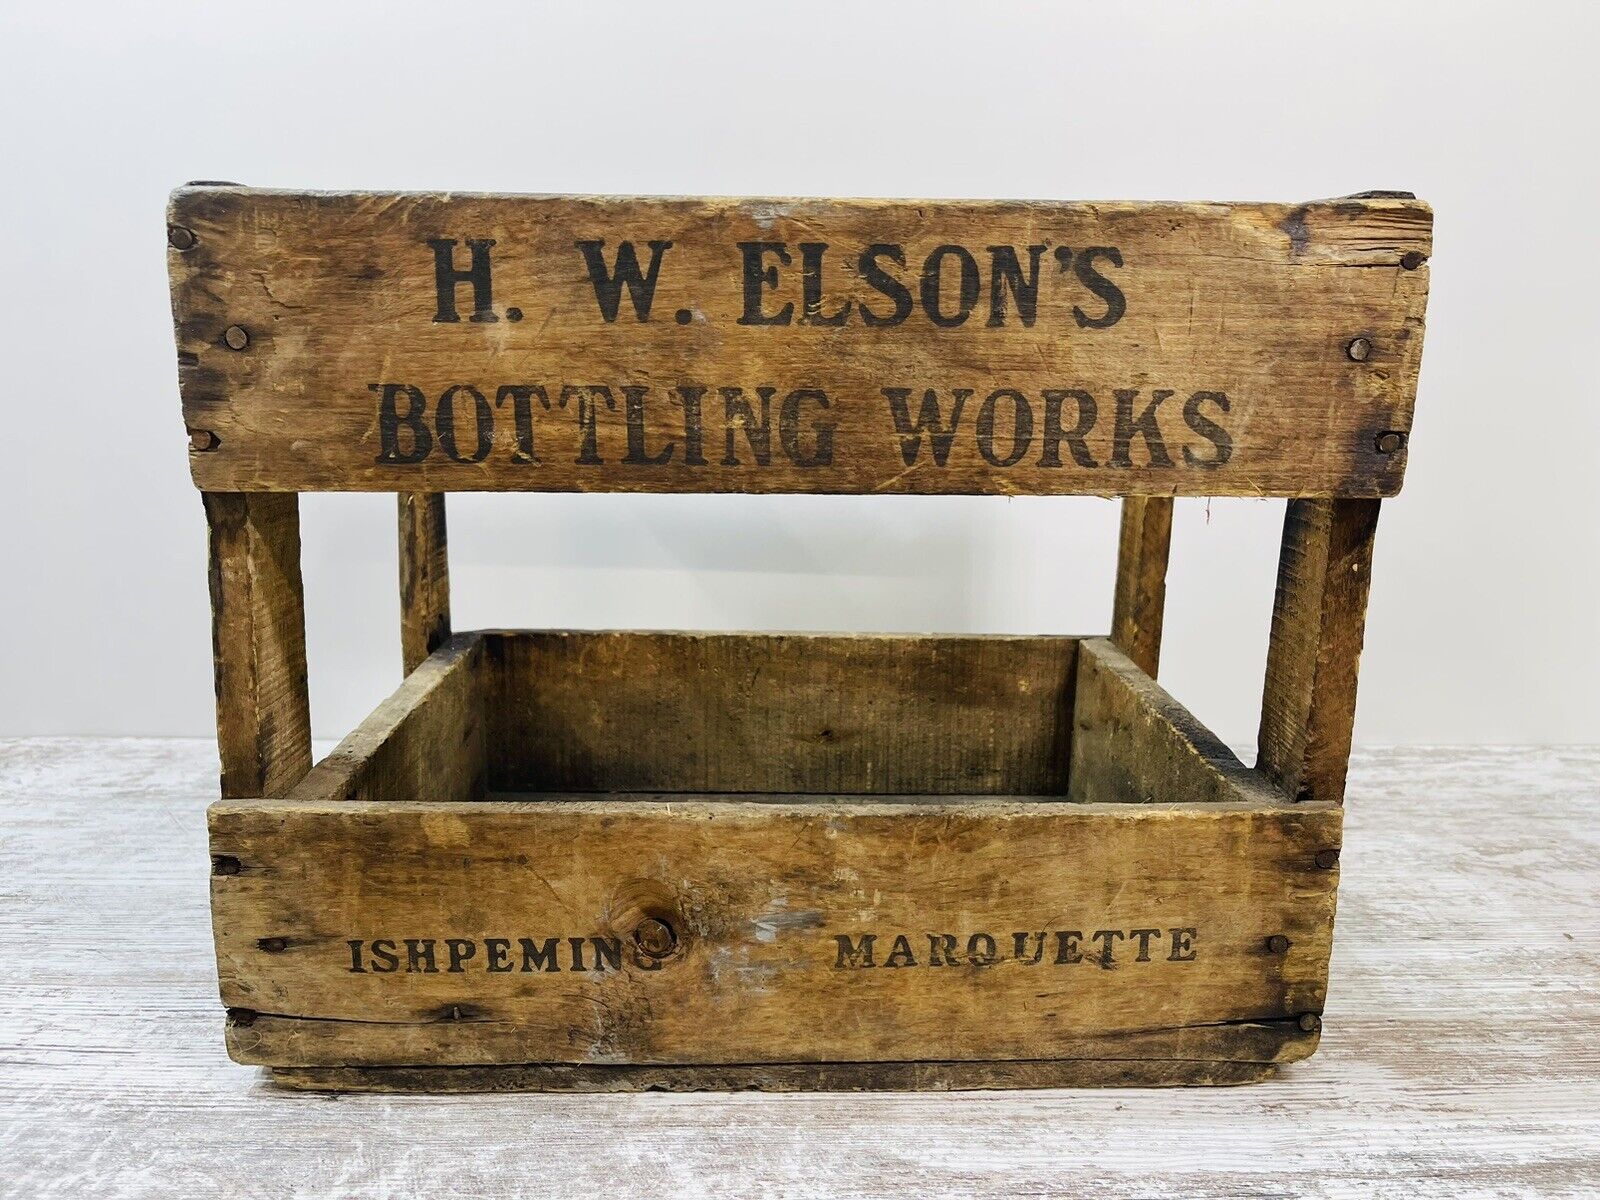 Vintage H.W. Elson's Bottling Works Ishpeming Marquette Michigan Wood Crate